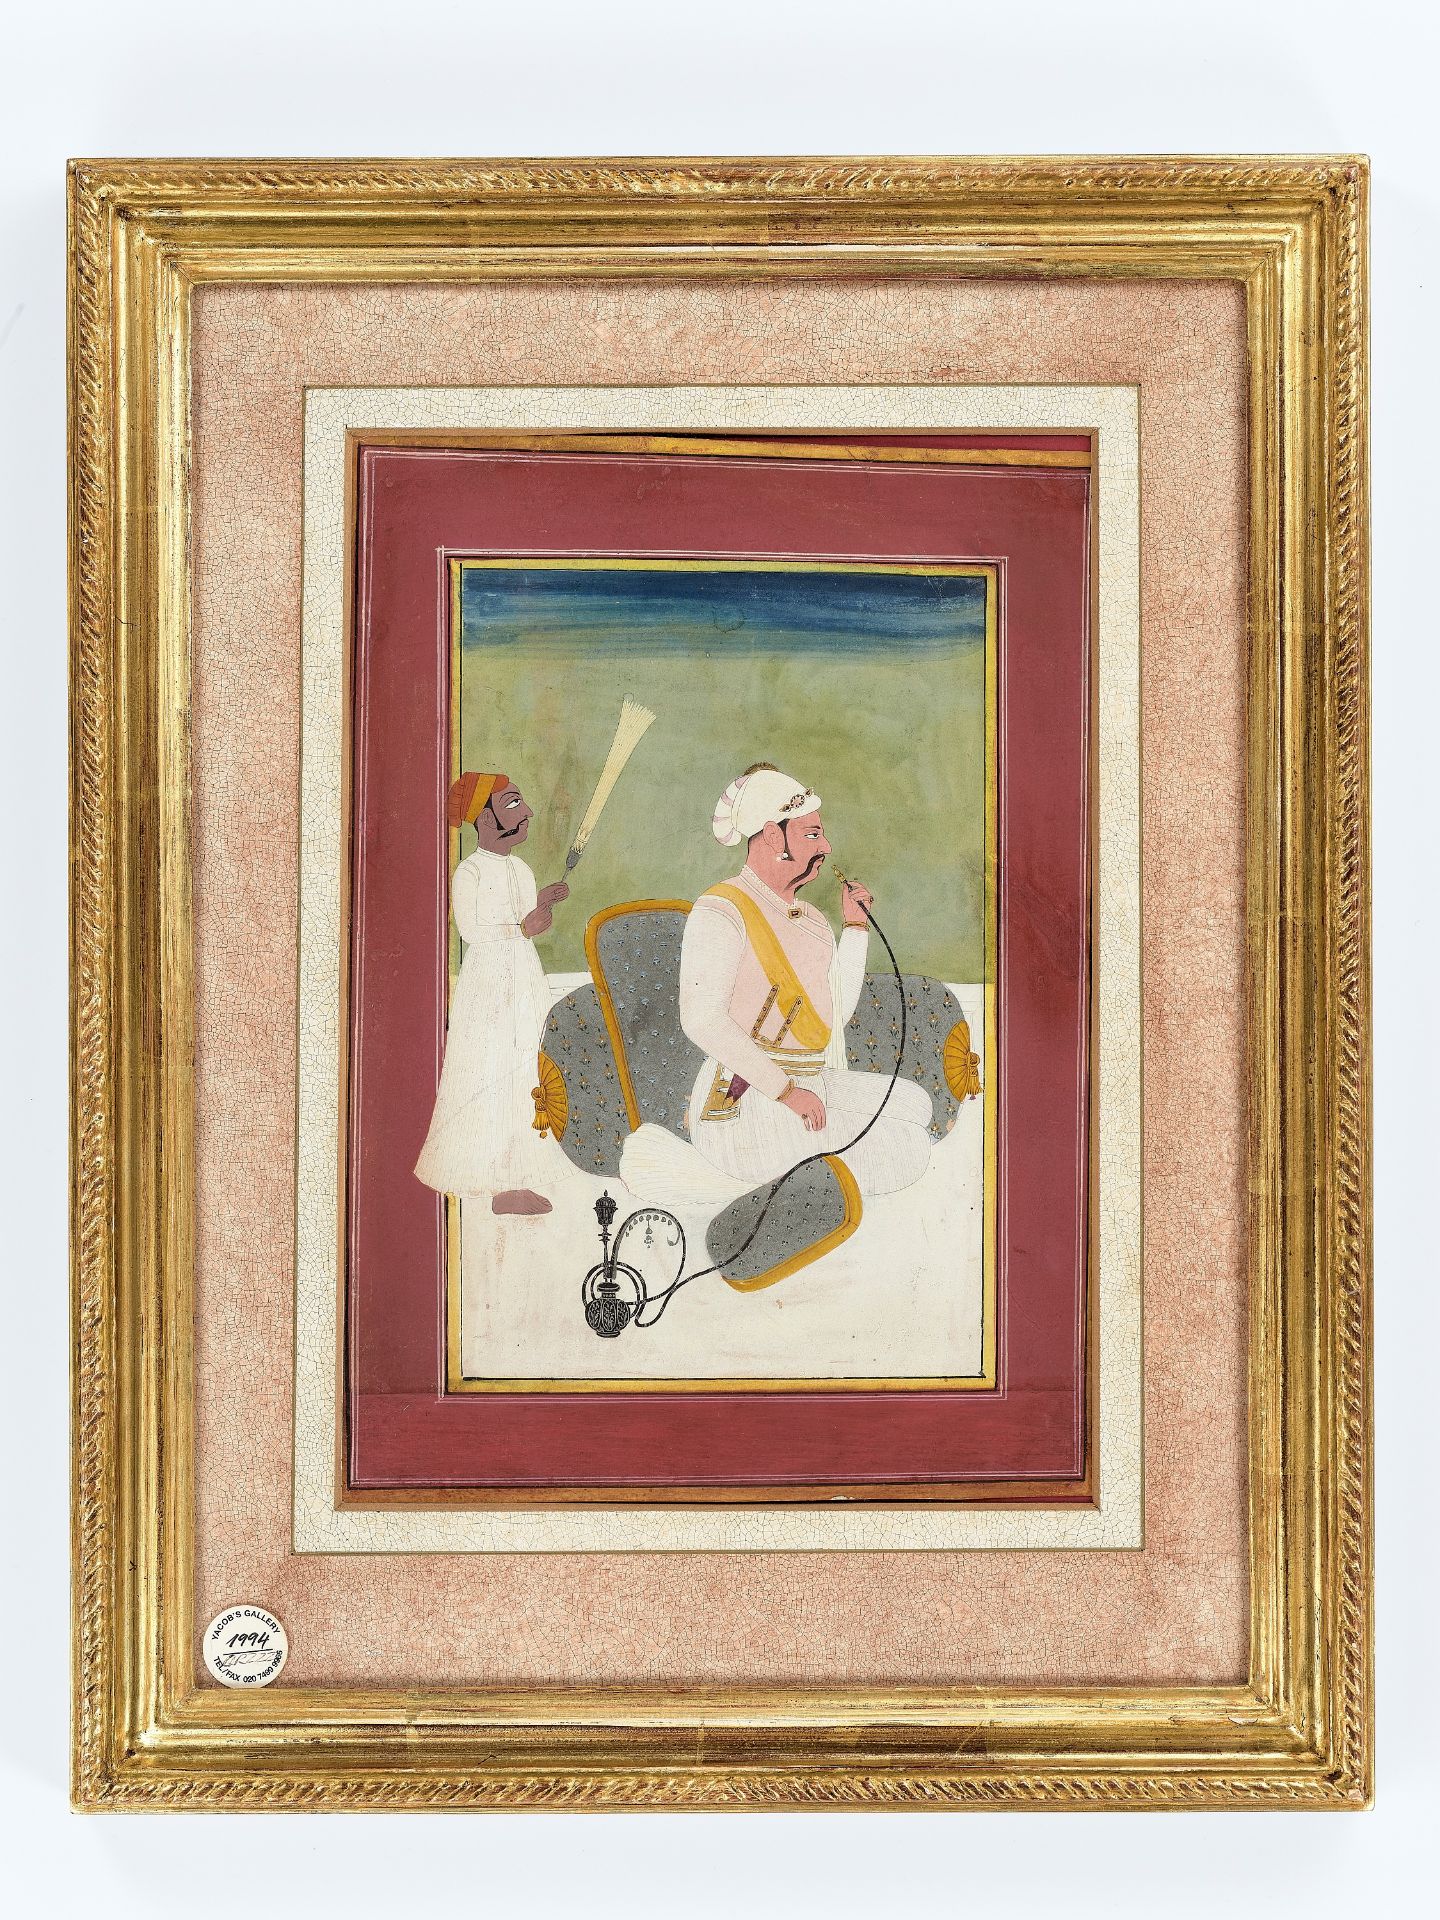 AN INDIAN MINIATURE PAINTING OF A MUGHAL PRINCE SMOKING A HUQQA - Image 6 of 7